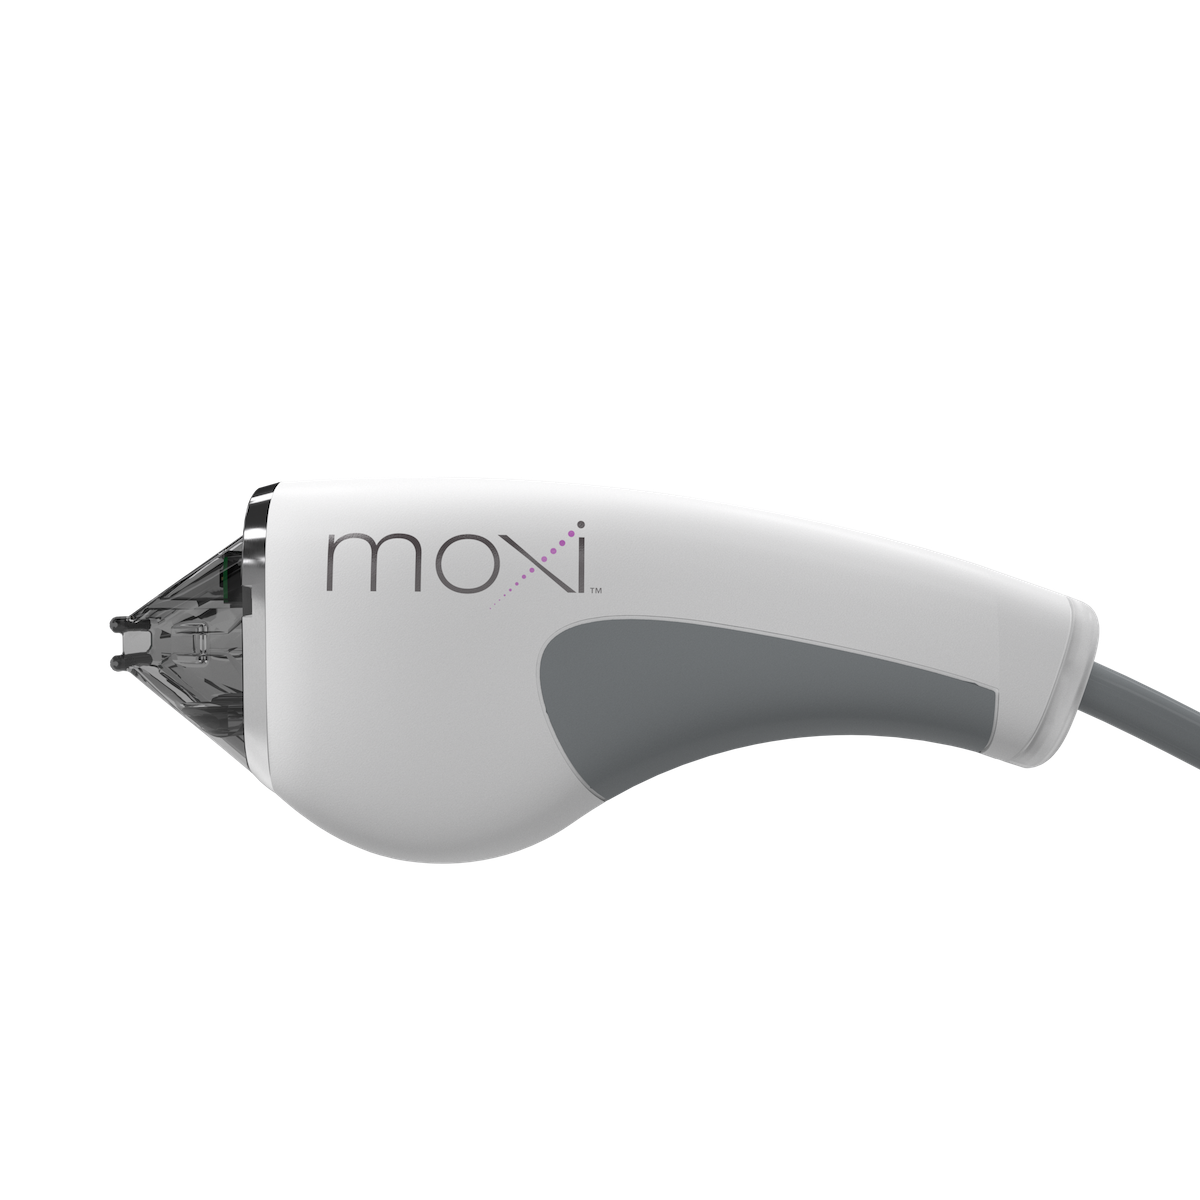 Moxi device side view